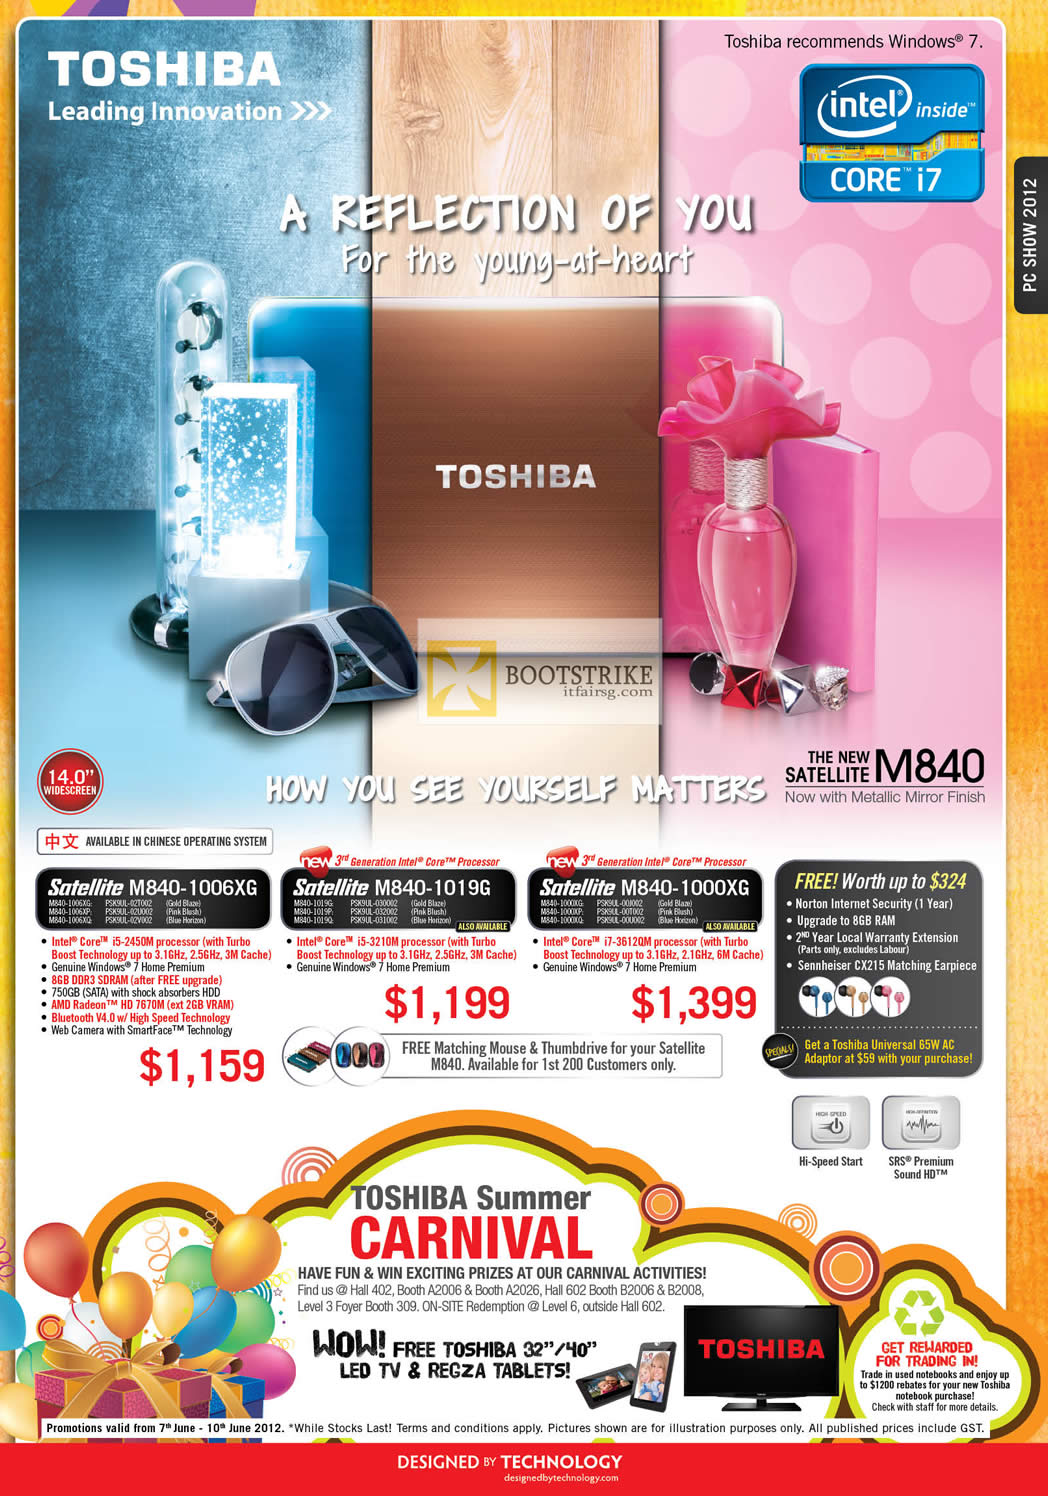 PC SHOW 2012 price list image brochure of Toshiba Notebooks Satallite M840-1006XG, M840-1019G, M840-1000XG